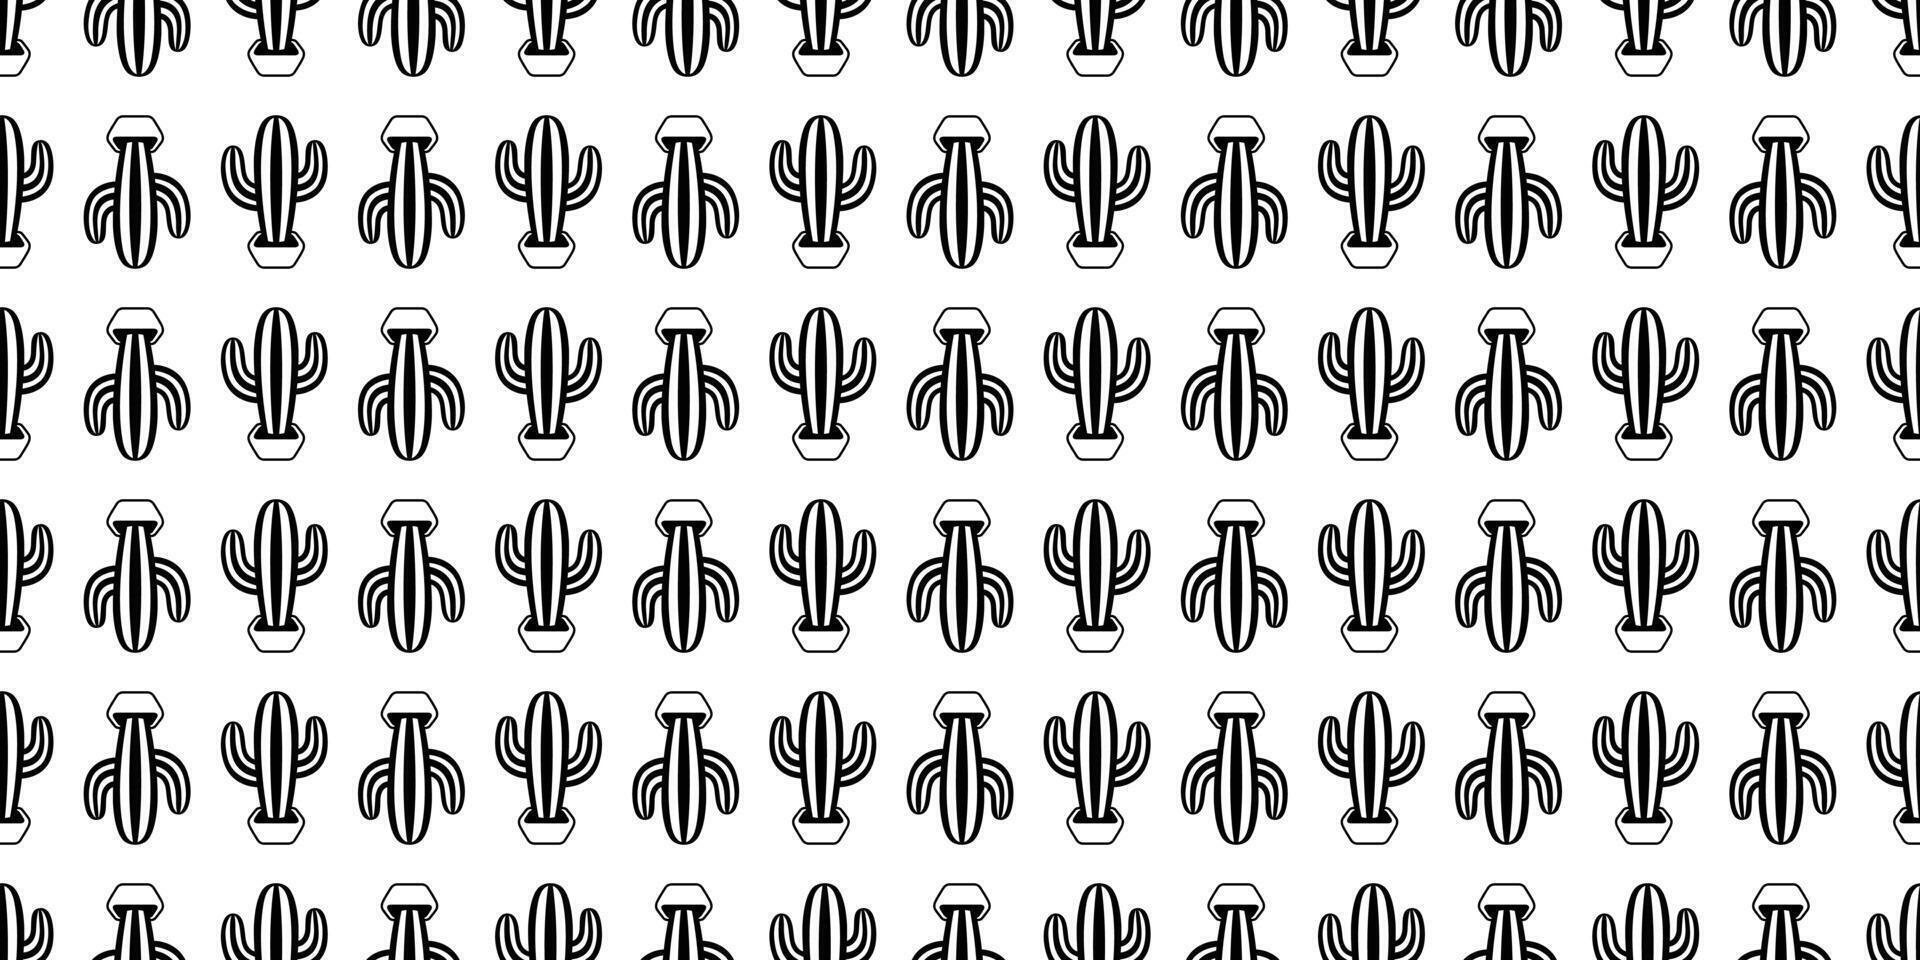 cactus seamless pattern vector Desert botanica flower garden plant cartoon tile background repeat wallpaper scarf isolated doodle white illustration design